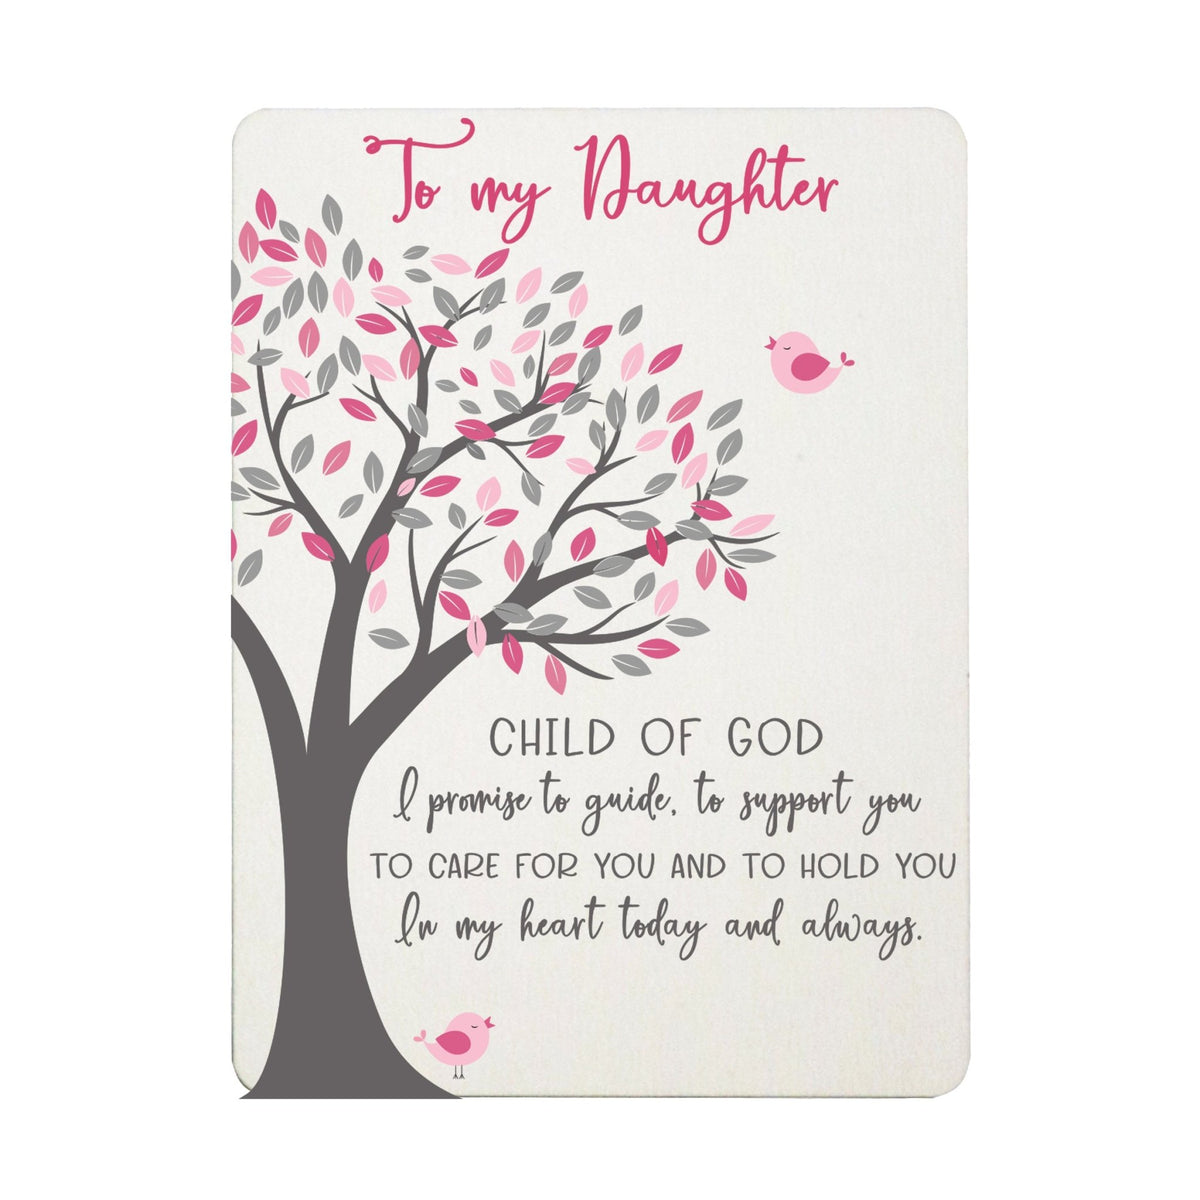 Newborn Baby Scripture Magnet for Fridge - Child of God - LifeSong Milestones